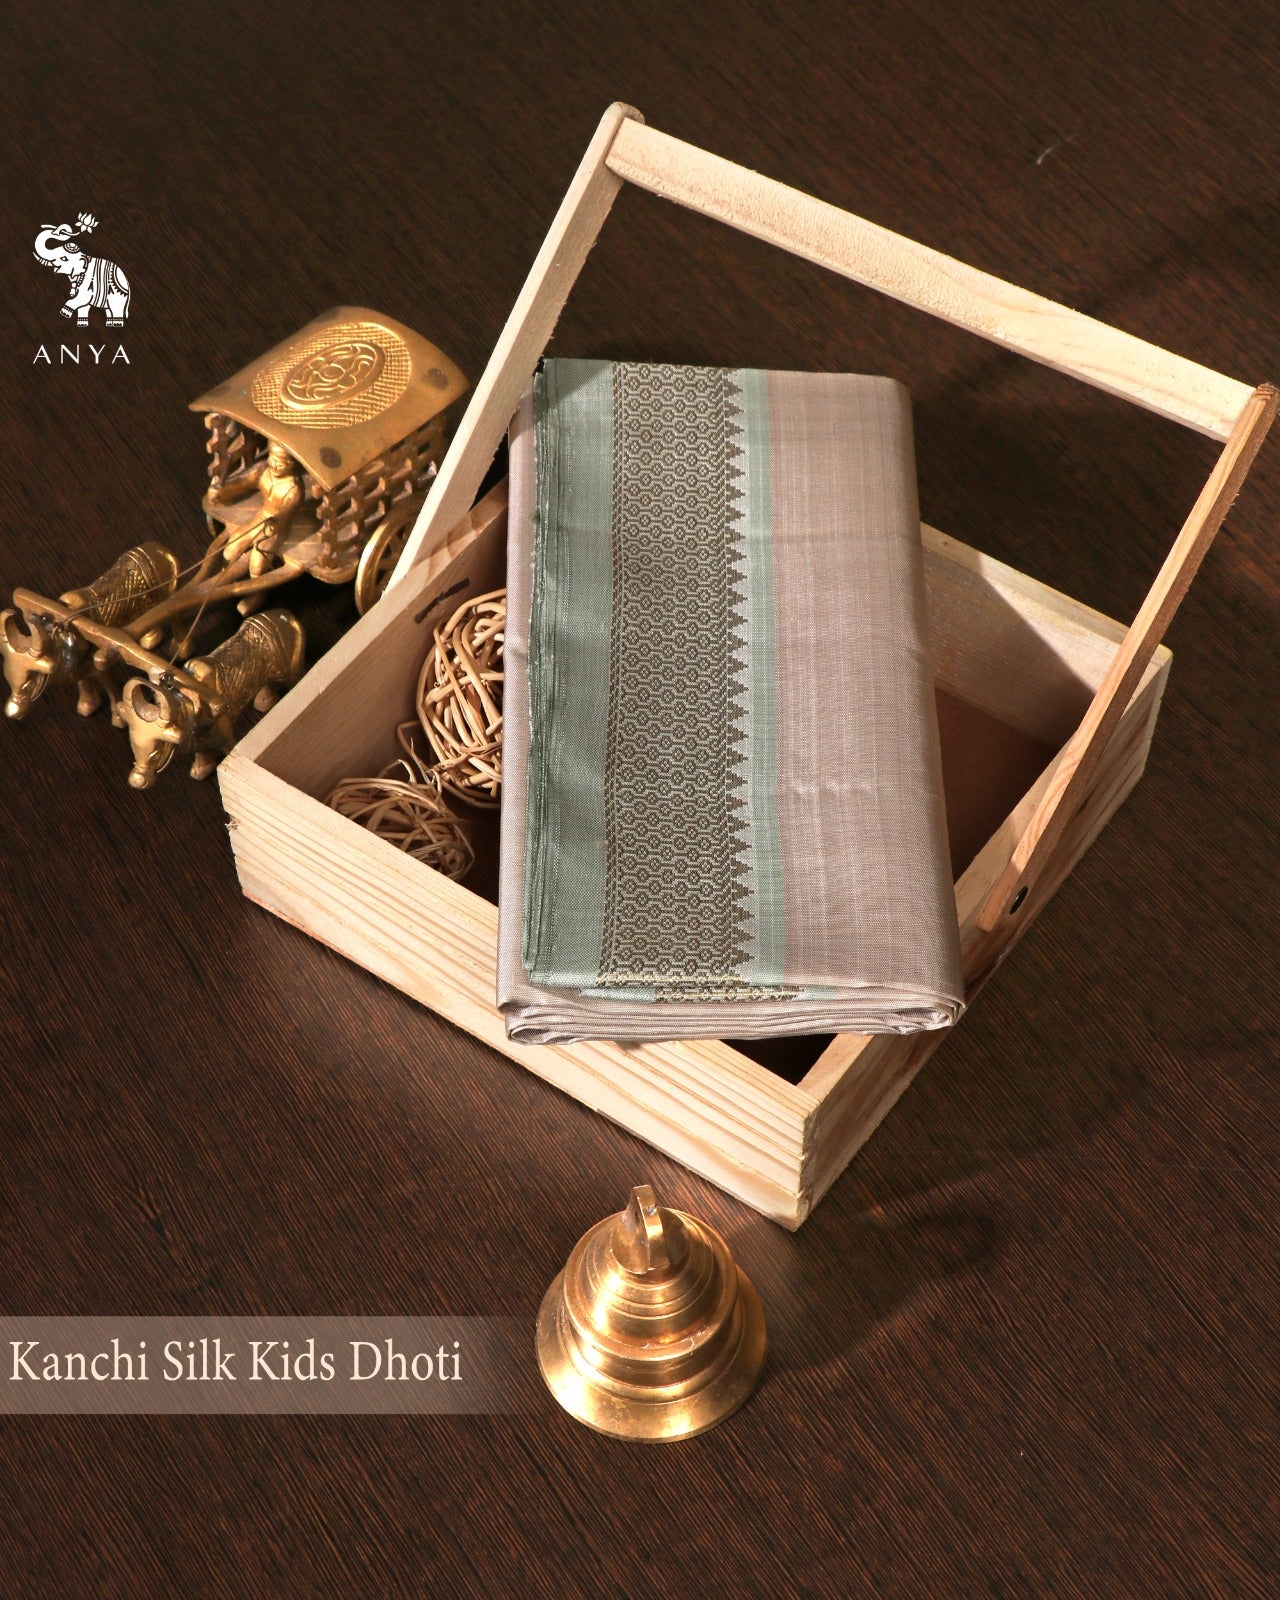 Off White Kanchi Silk Dhoti with Mint Green Golden Zari Border